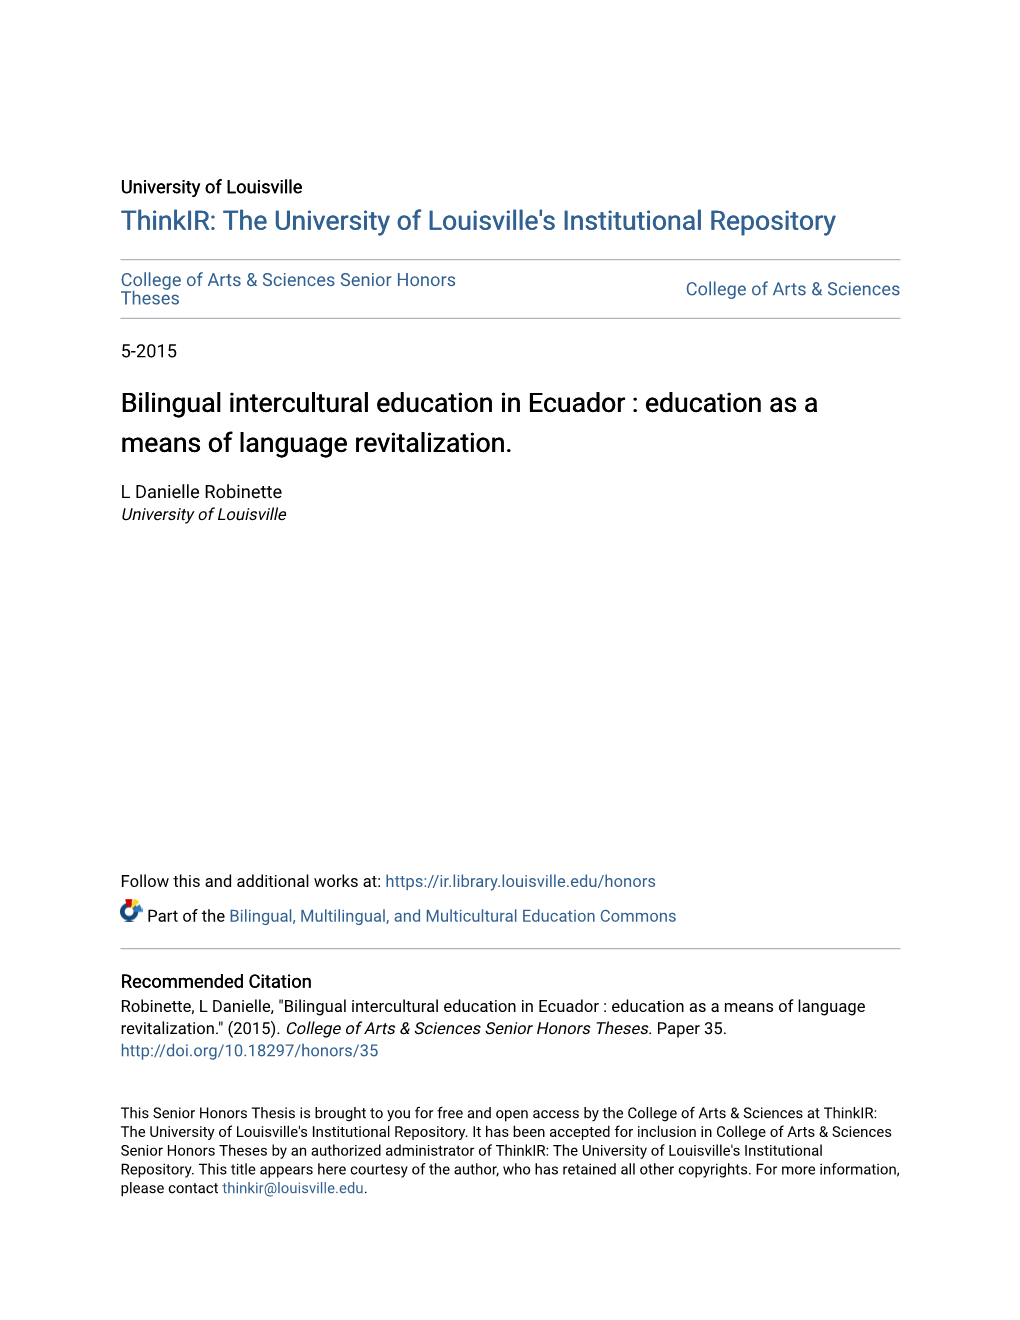 Bilingual Intercultural Education in Ecuador : Education As a Means of Language Revitalization